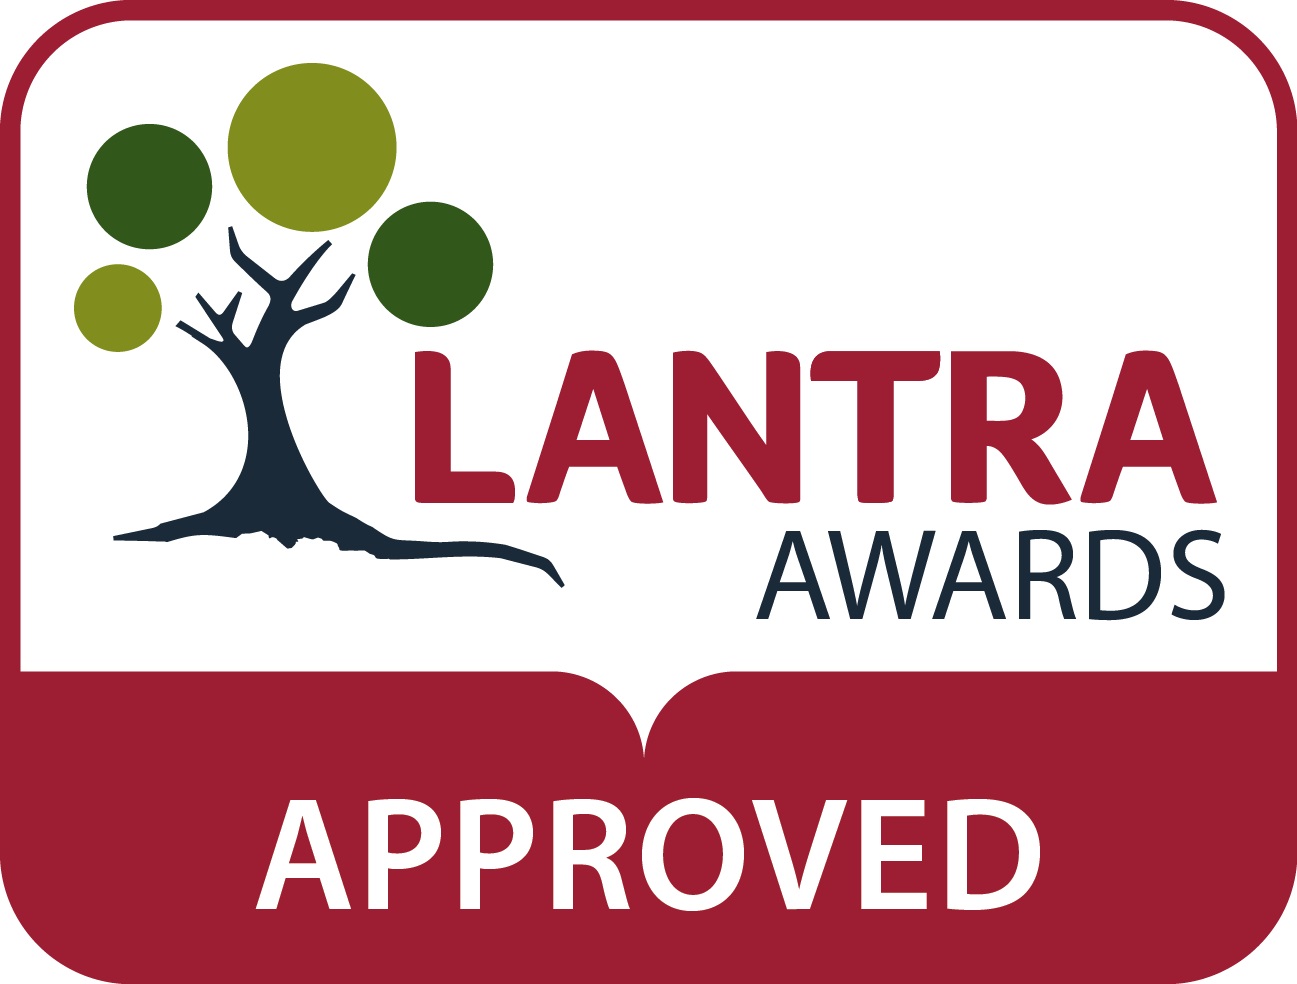 Lantra Awards approved logo icon.